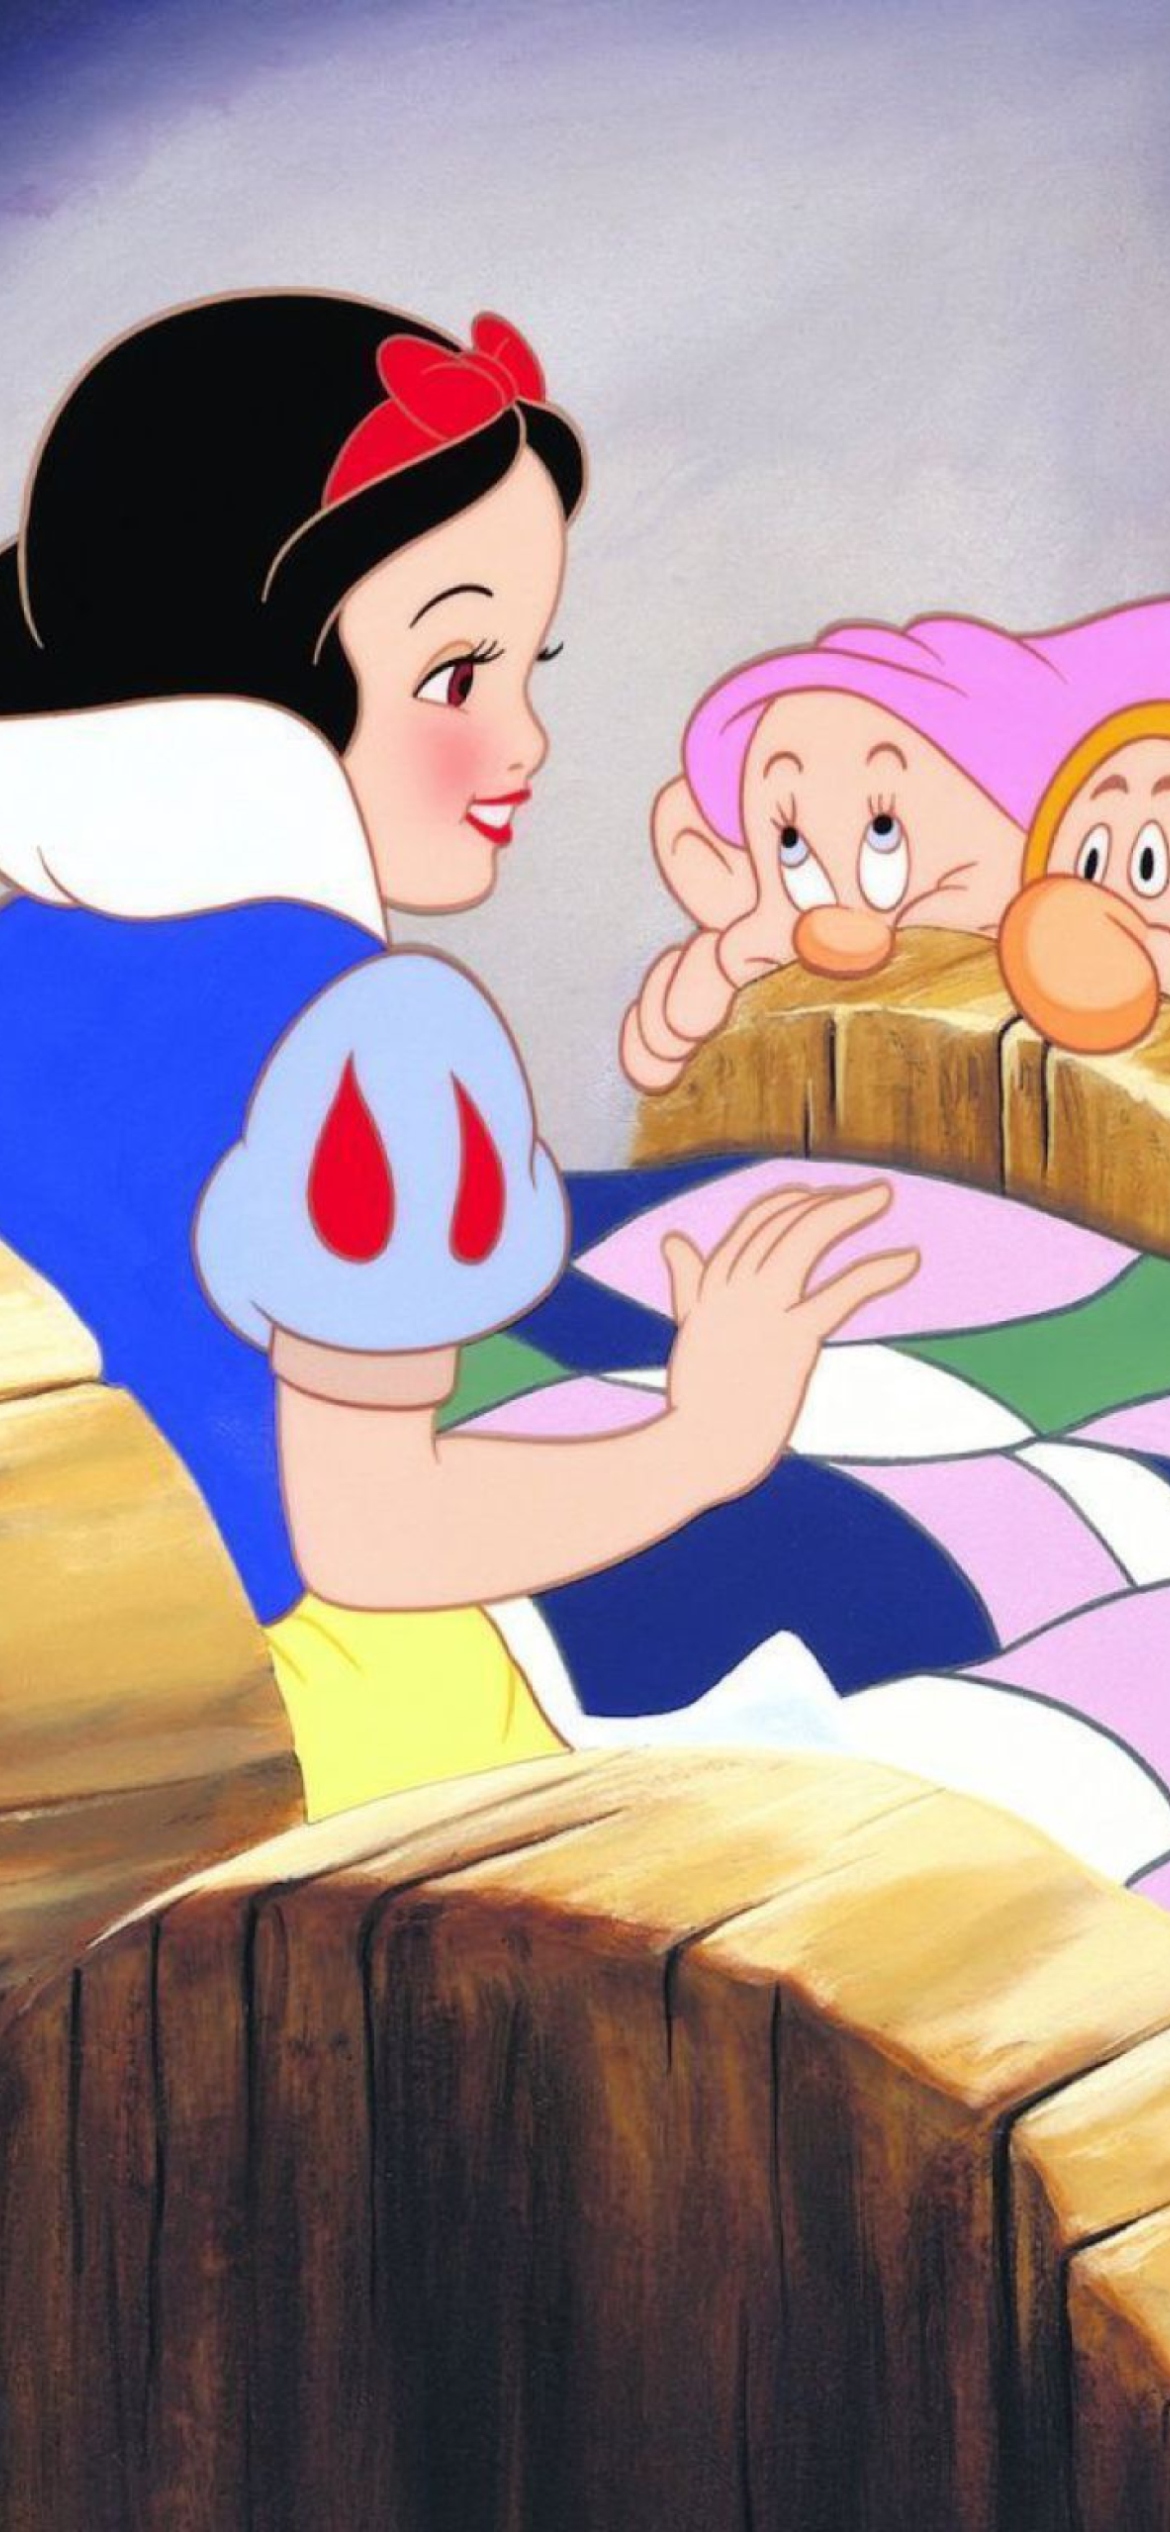 Snow White and the Seven Dwarfs wallpaper 1170x2532